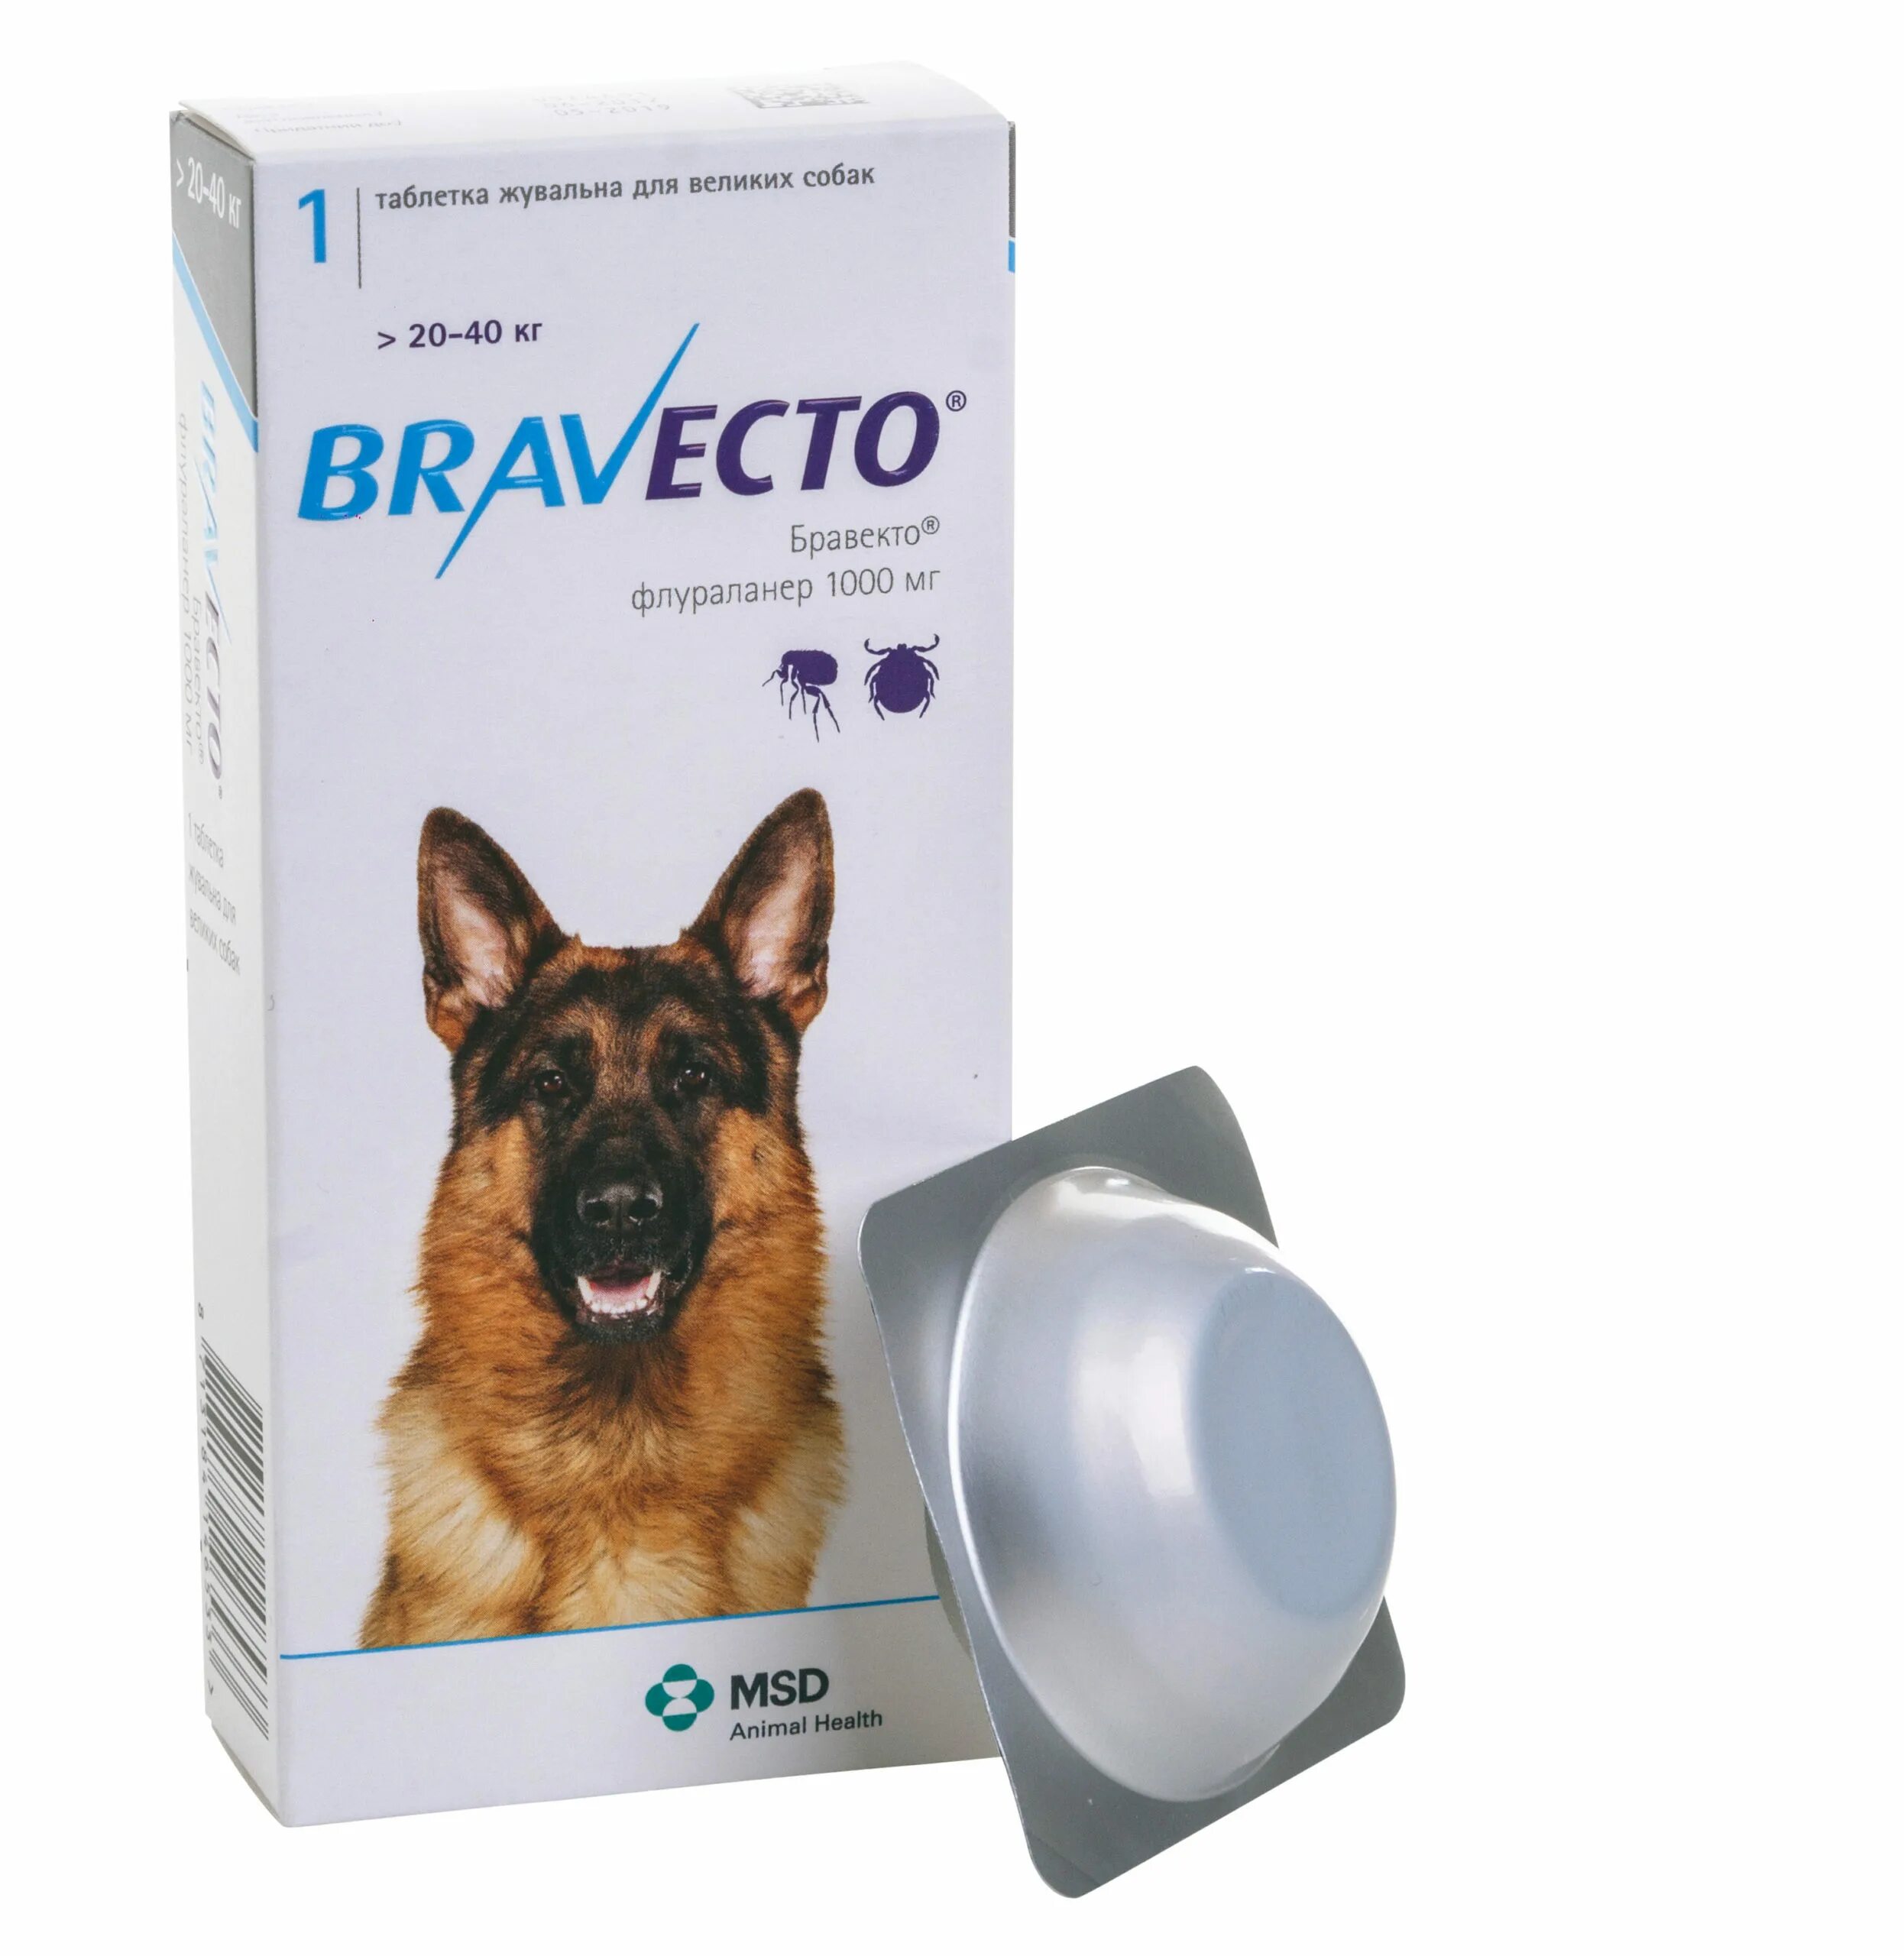 Аналог бравекто для собак 20 40 кг. Таблетки от блох и клещей для собак Бравекто. Бравекто для собак 20-40 кг таблетки. Бравекто (Bravecto) 20-40 кг, таблетка 1000 мг. Бравекто 112.5 мг Флураланер.